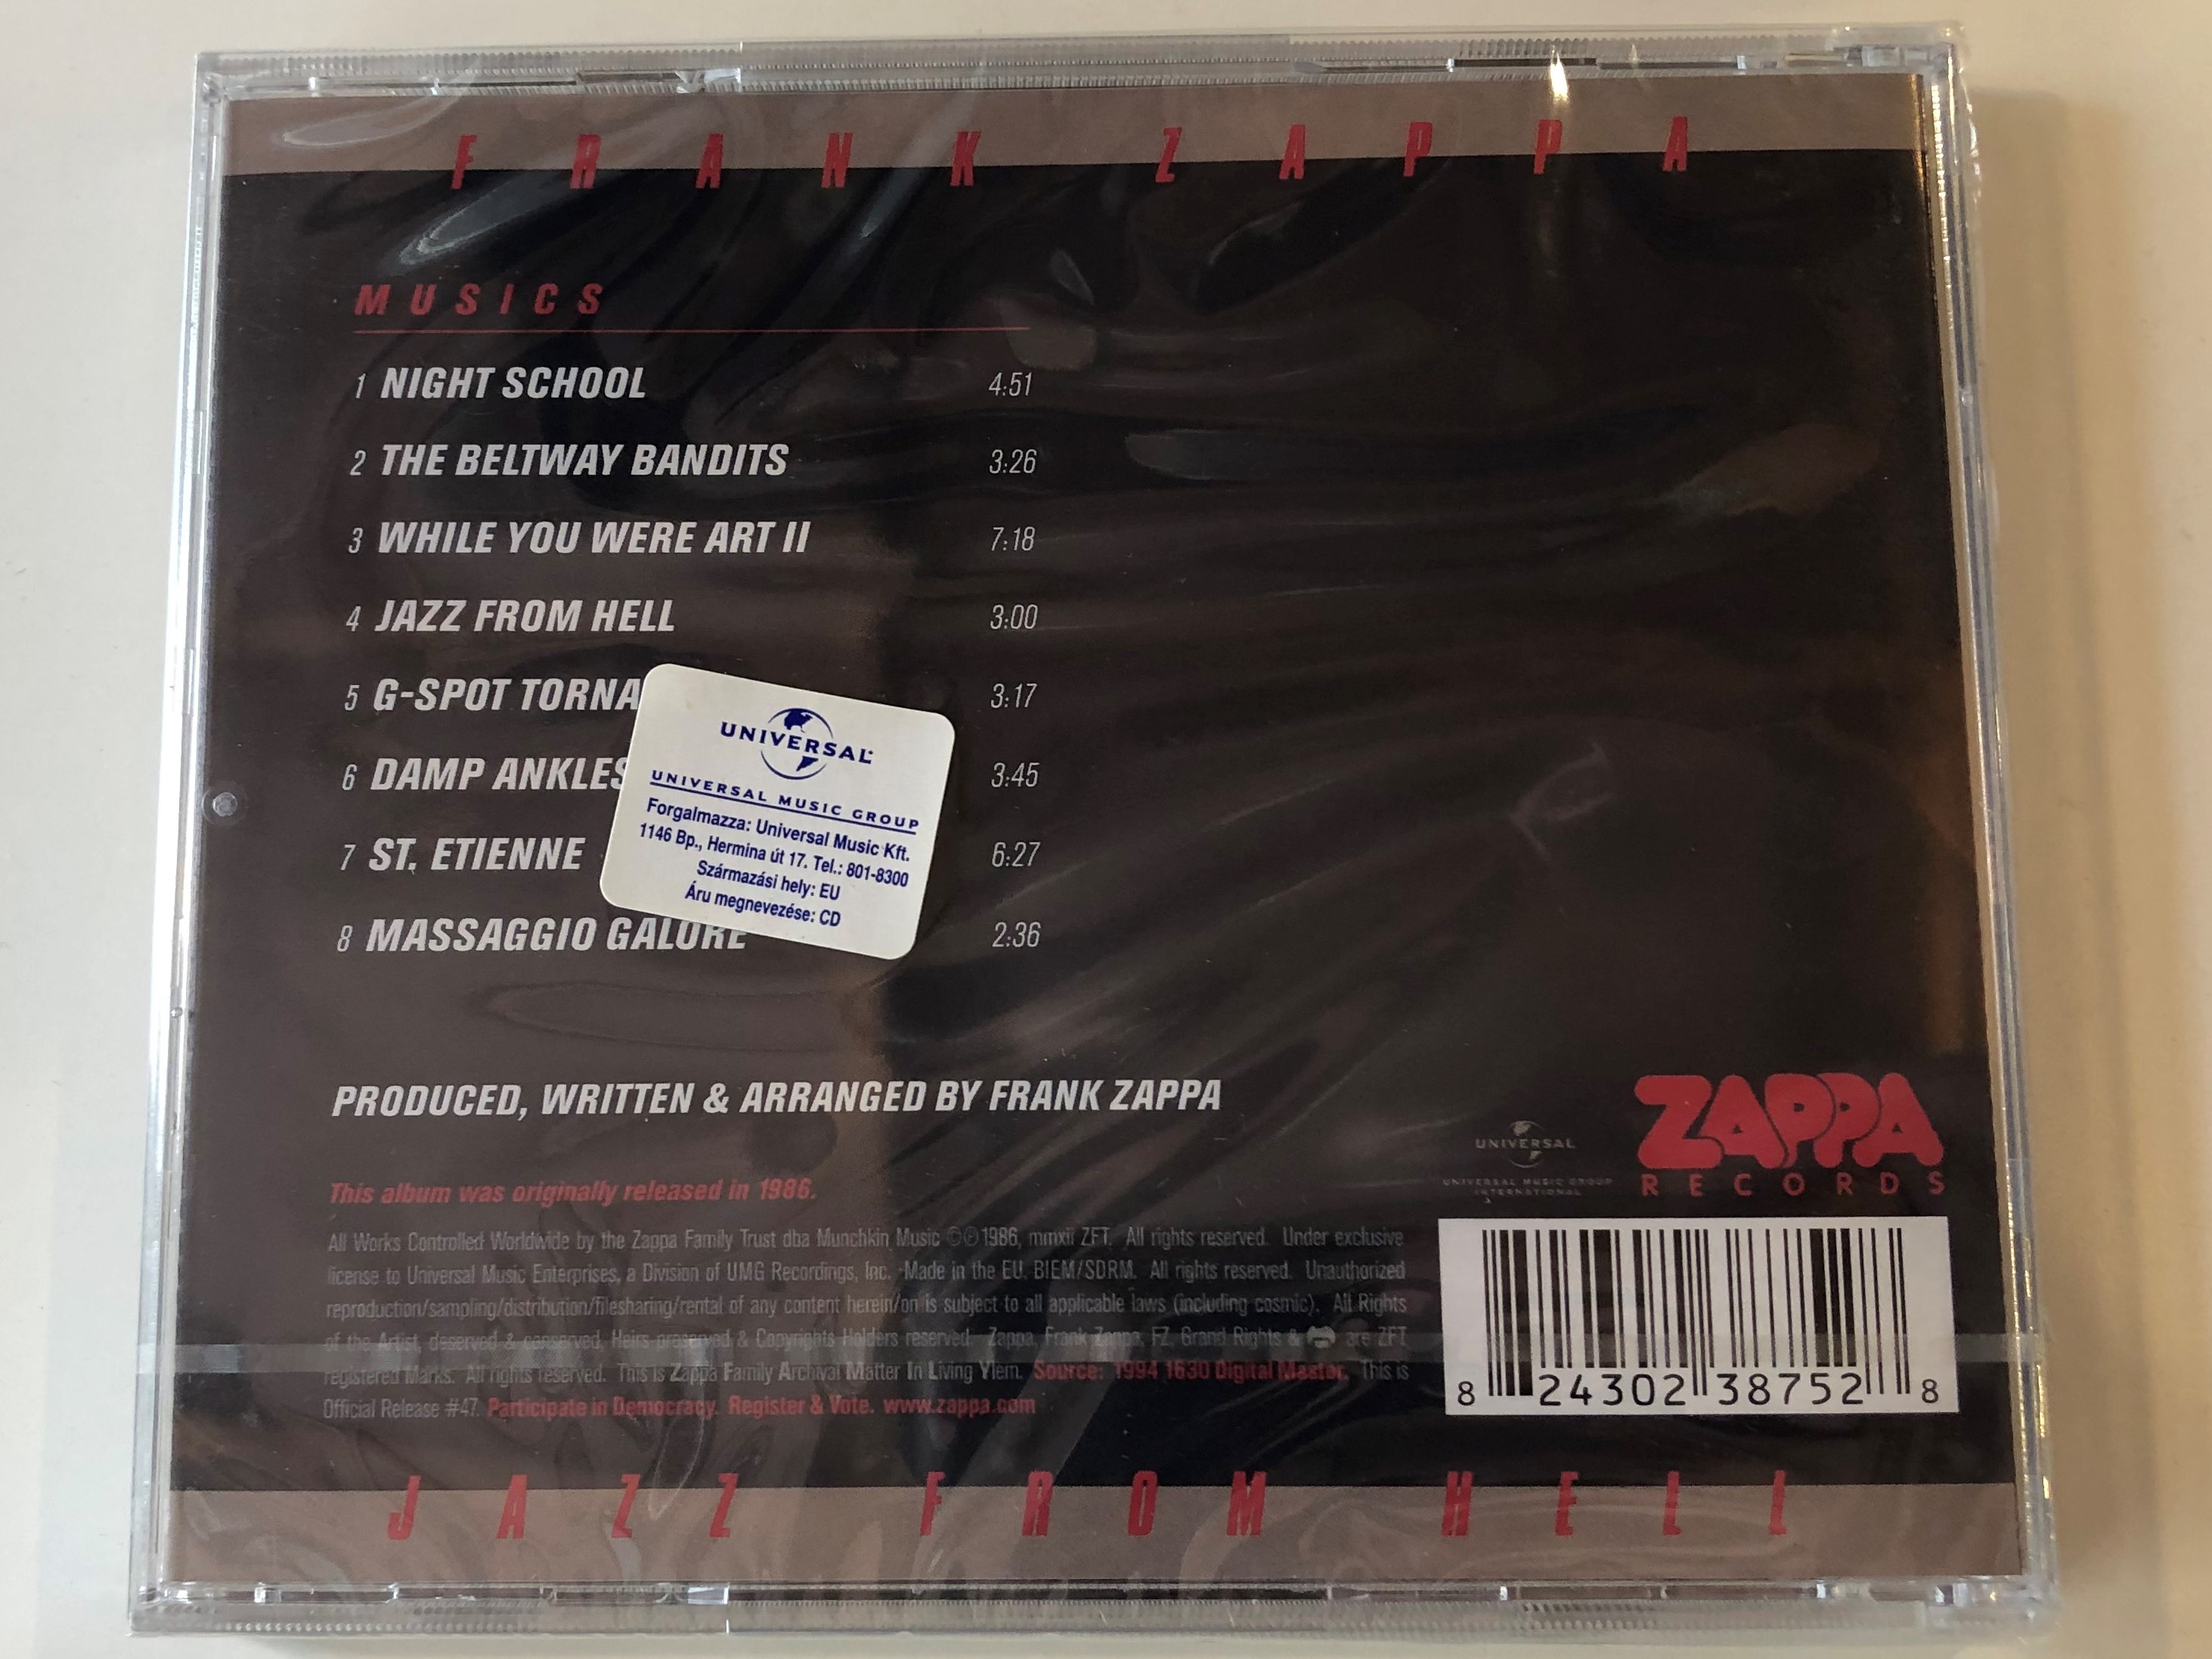 frank-zappa-jazz-from-hell-grammy-winner-for-best-rock-instrumental-performance-zappa-records-audio-cd-824302387528-2-.jpg